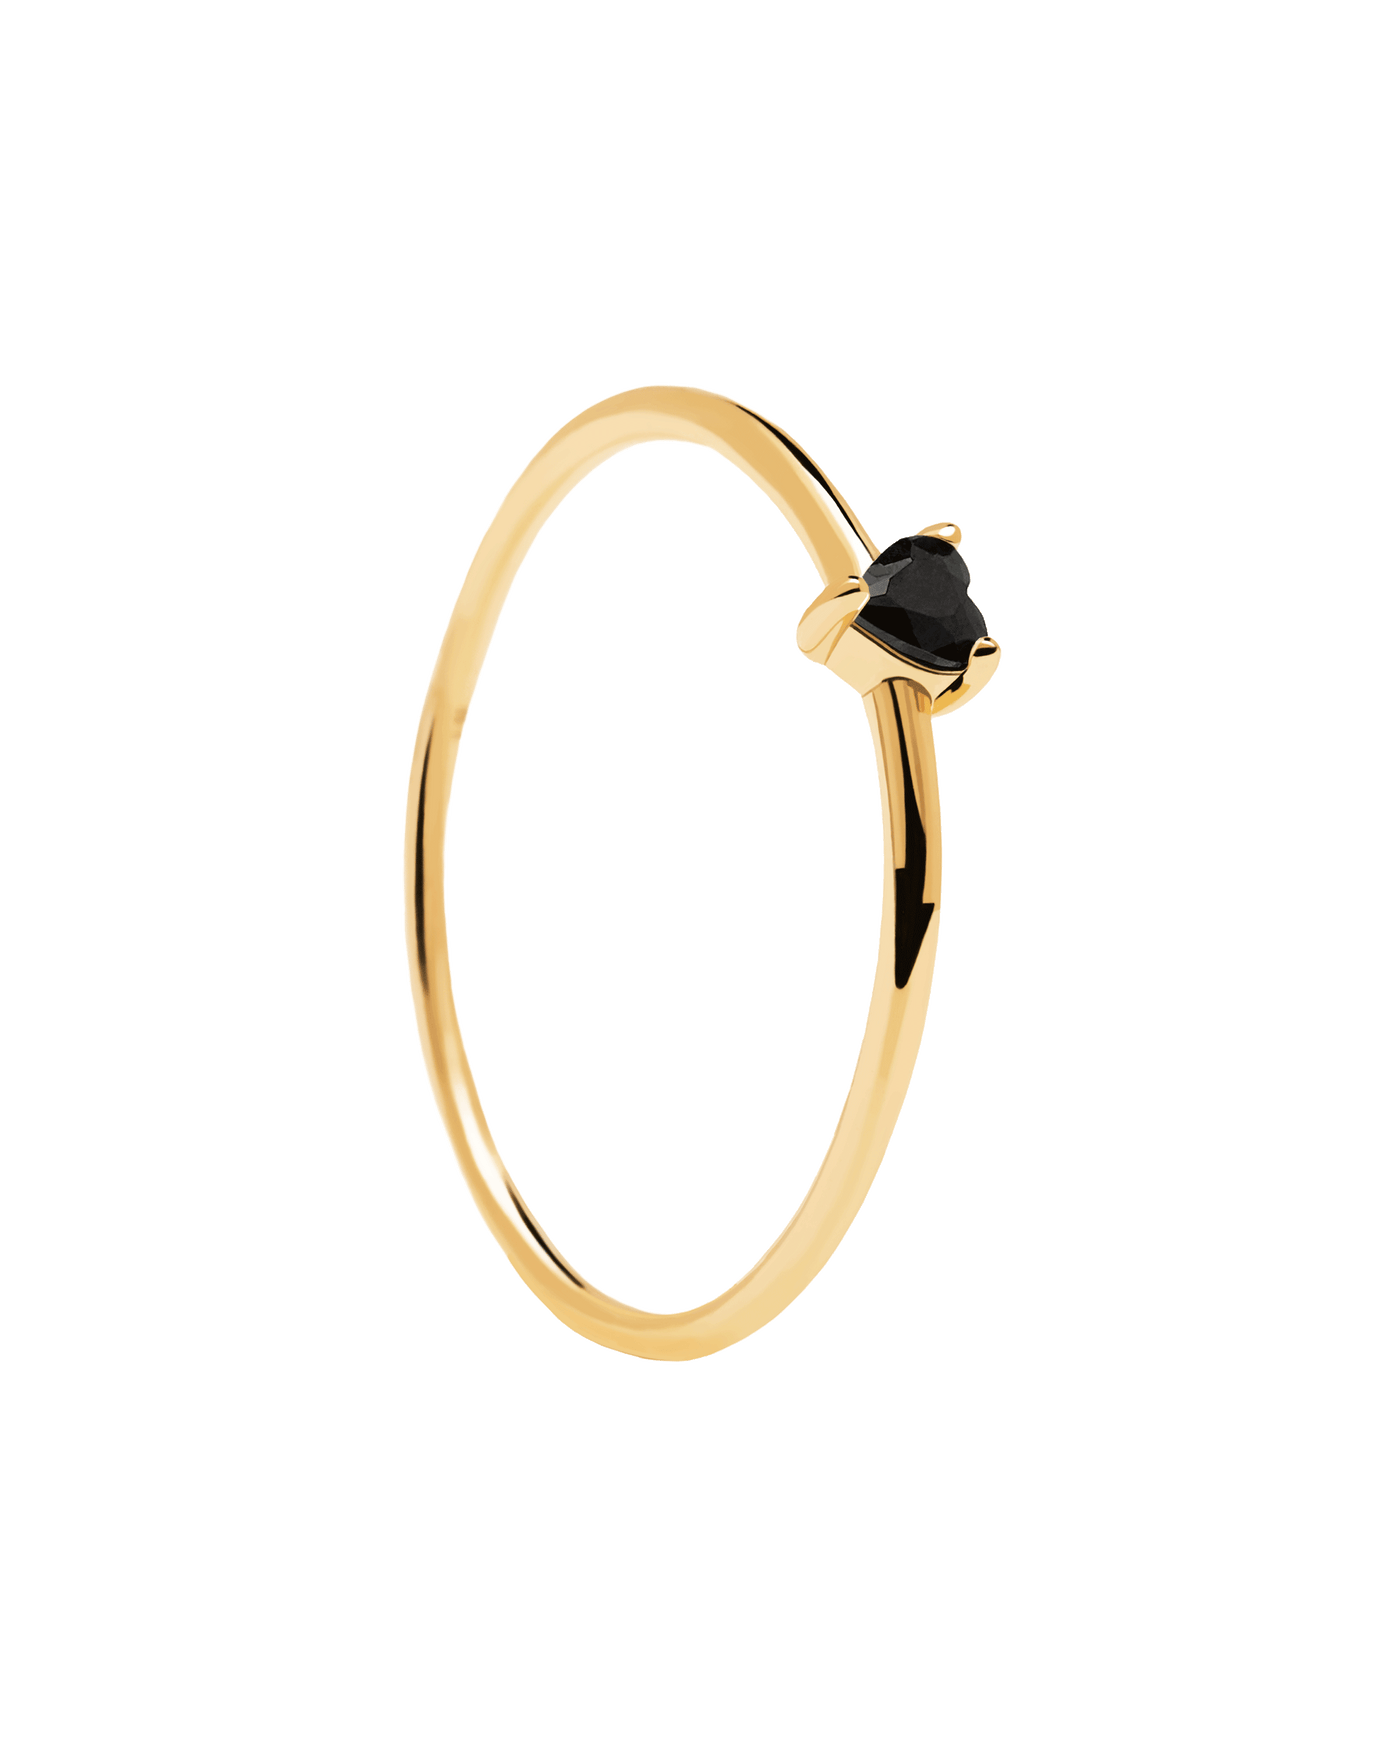 Black Silver Band Stainless Steel Ring for Men/Women/Boy/Girl ) Stainless  Steel Ring